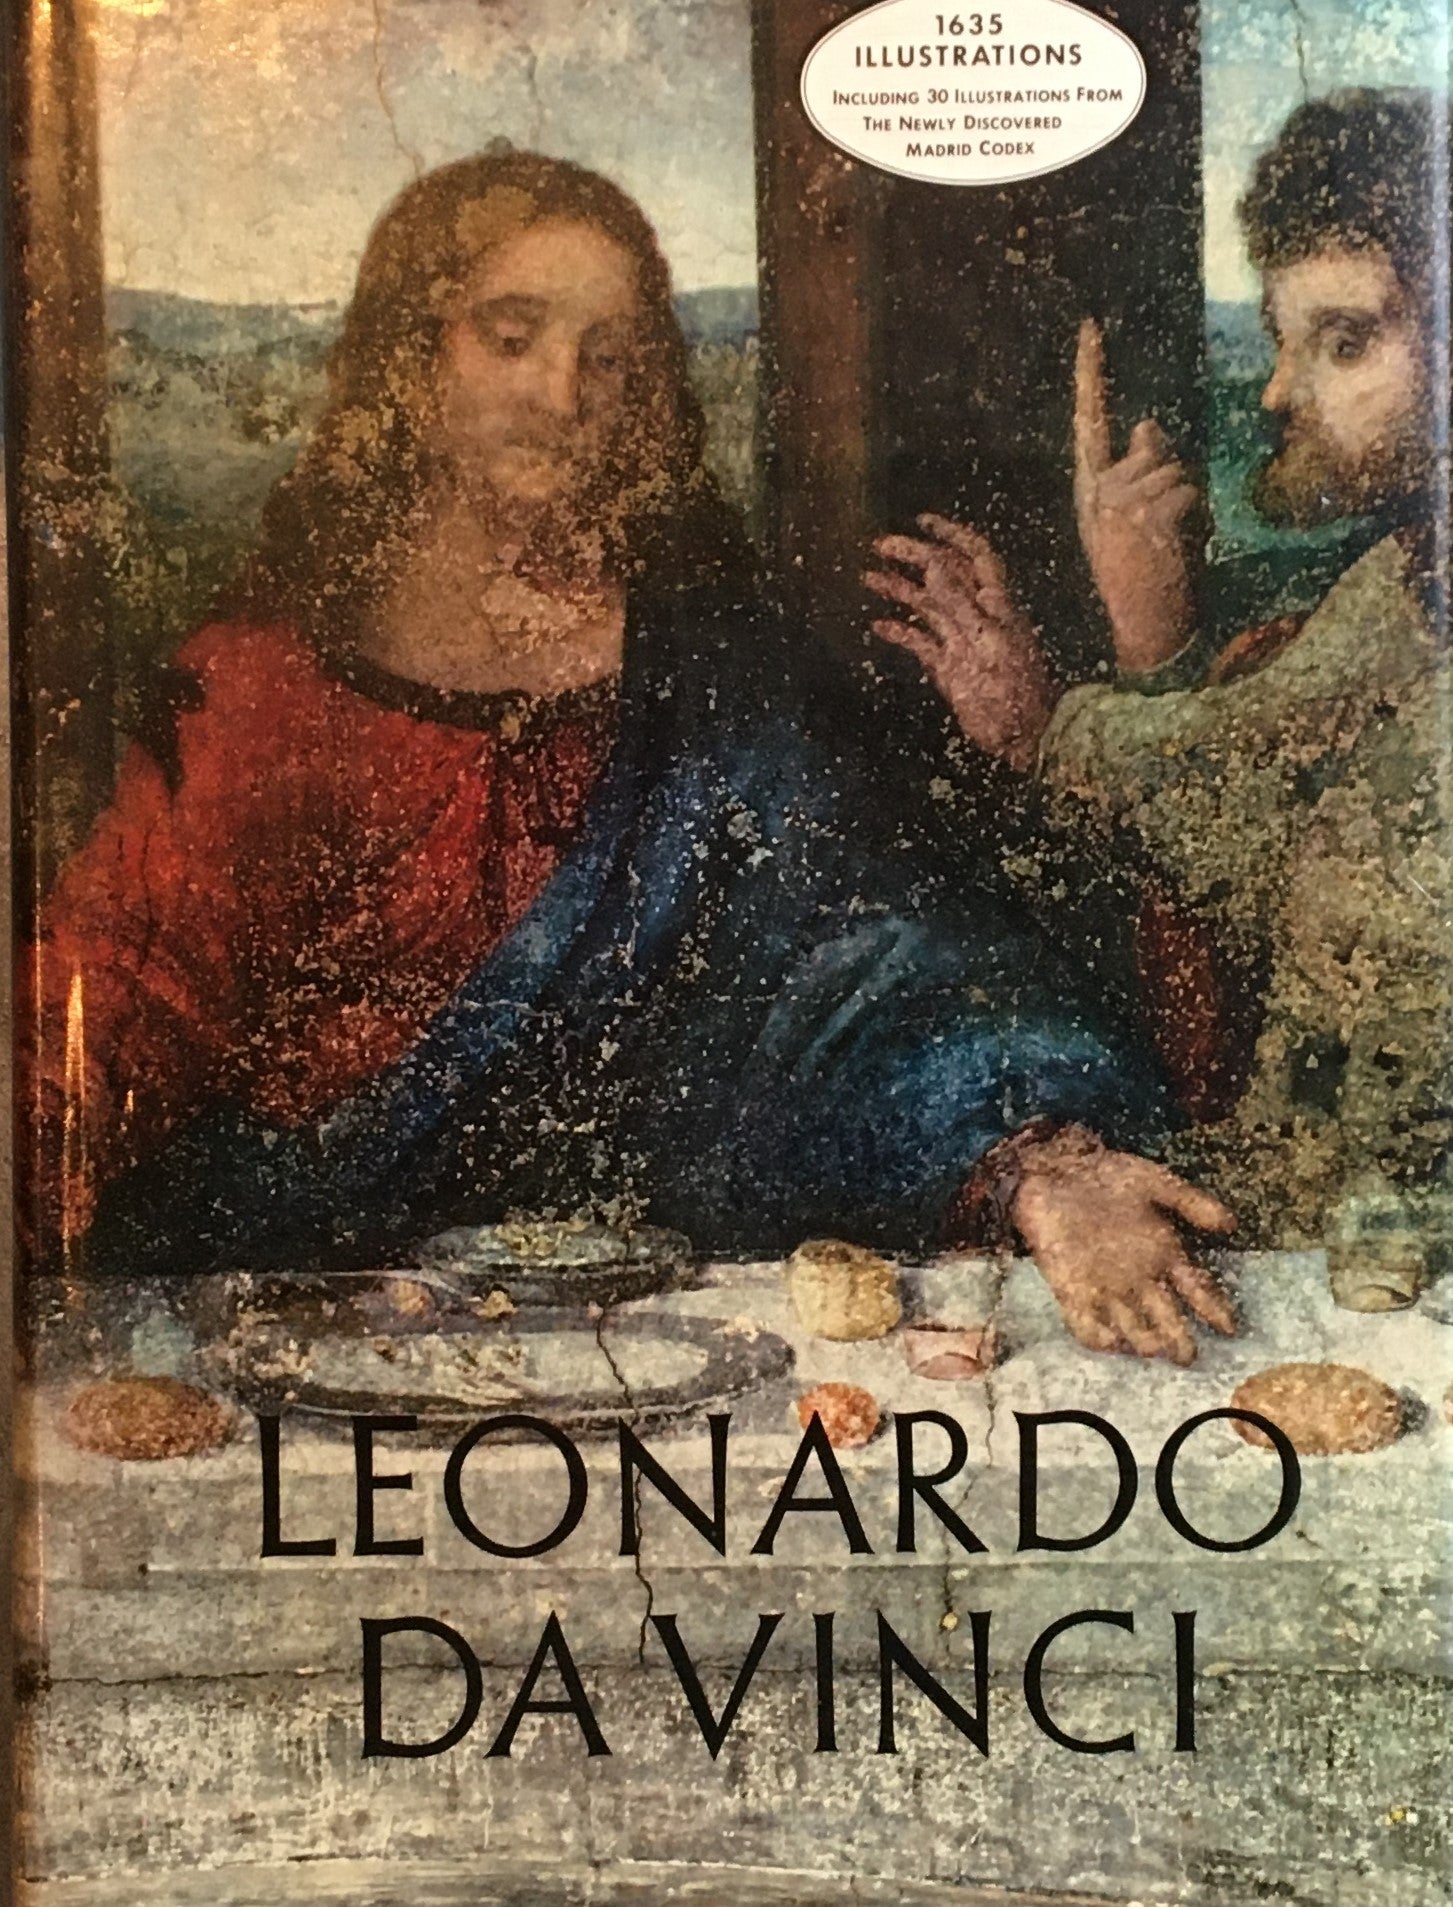 LEONARDO DA VINCI  AN ARTABRAS BOOK